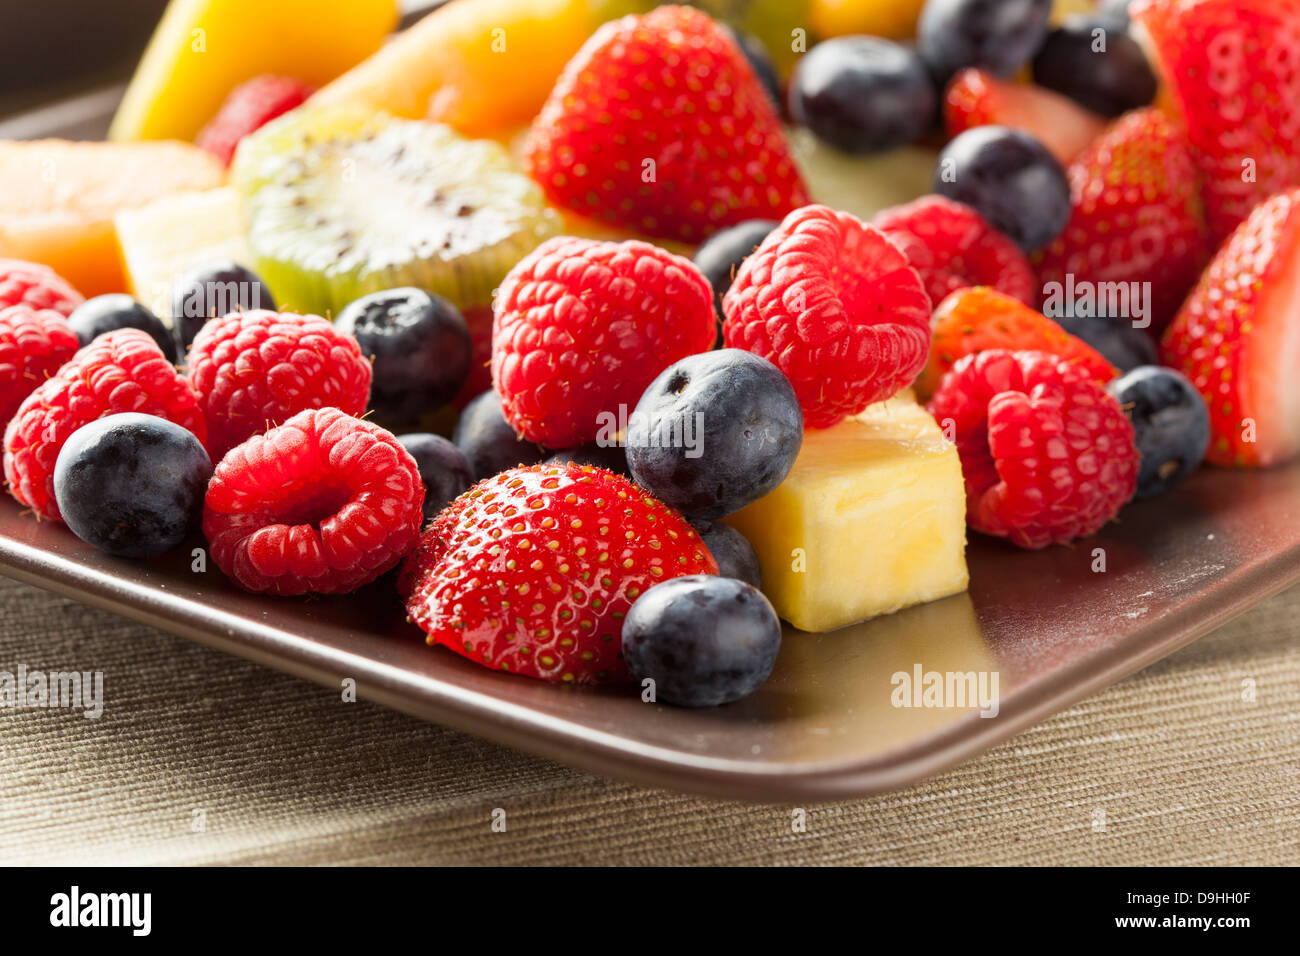 Fresh Organic Fruit Salad on a plate Stock Photo